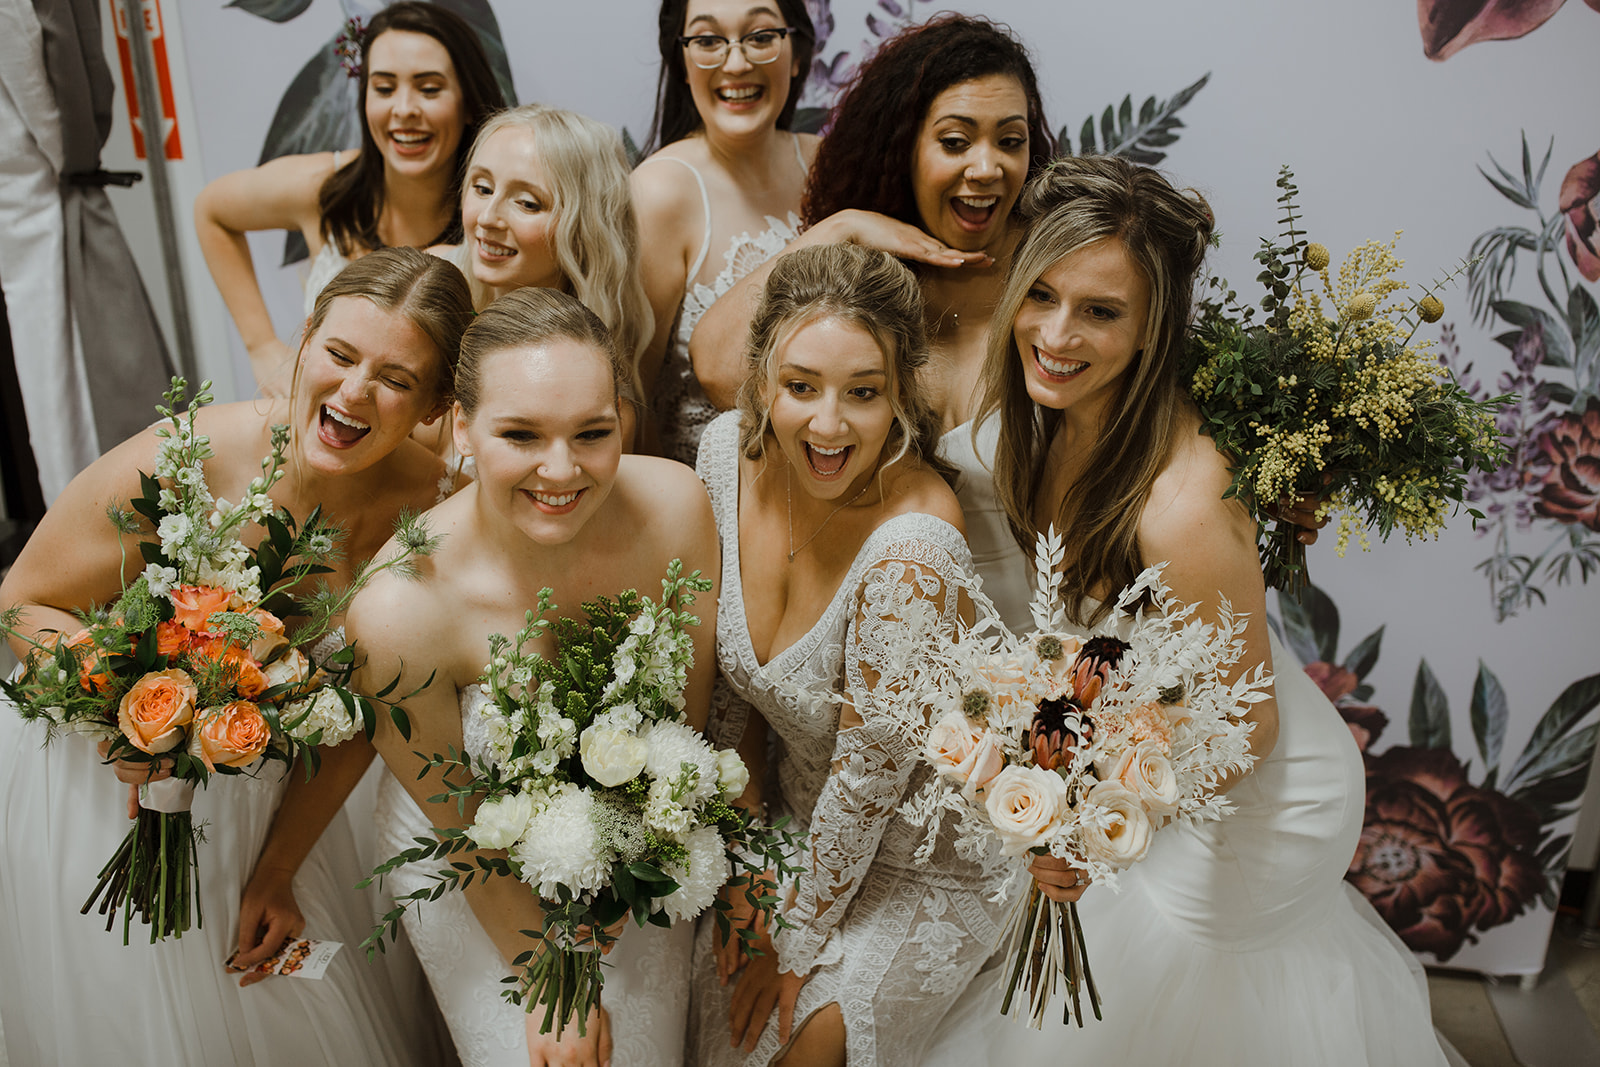 spokane wedding dress fashion show all bridal models funny photobooth